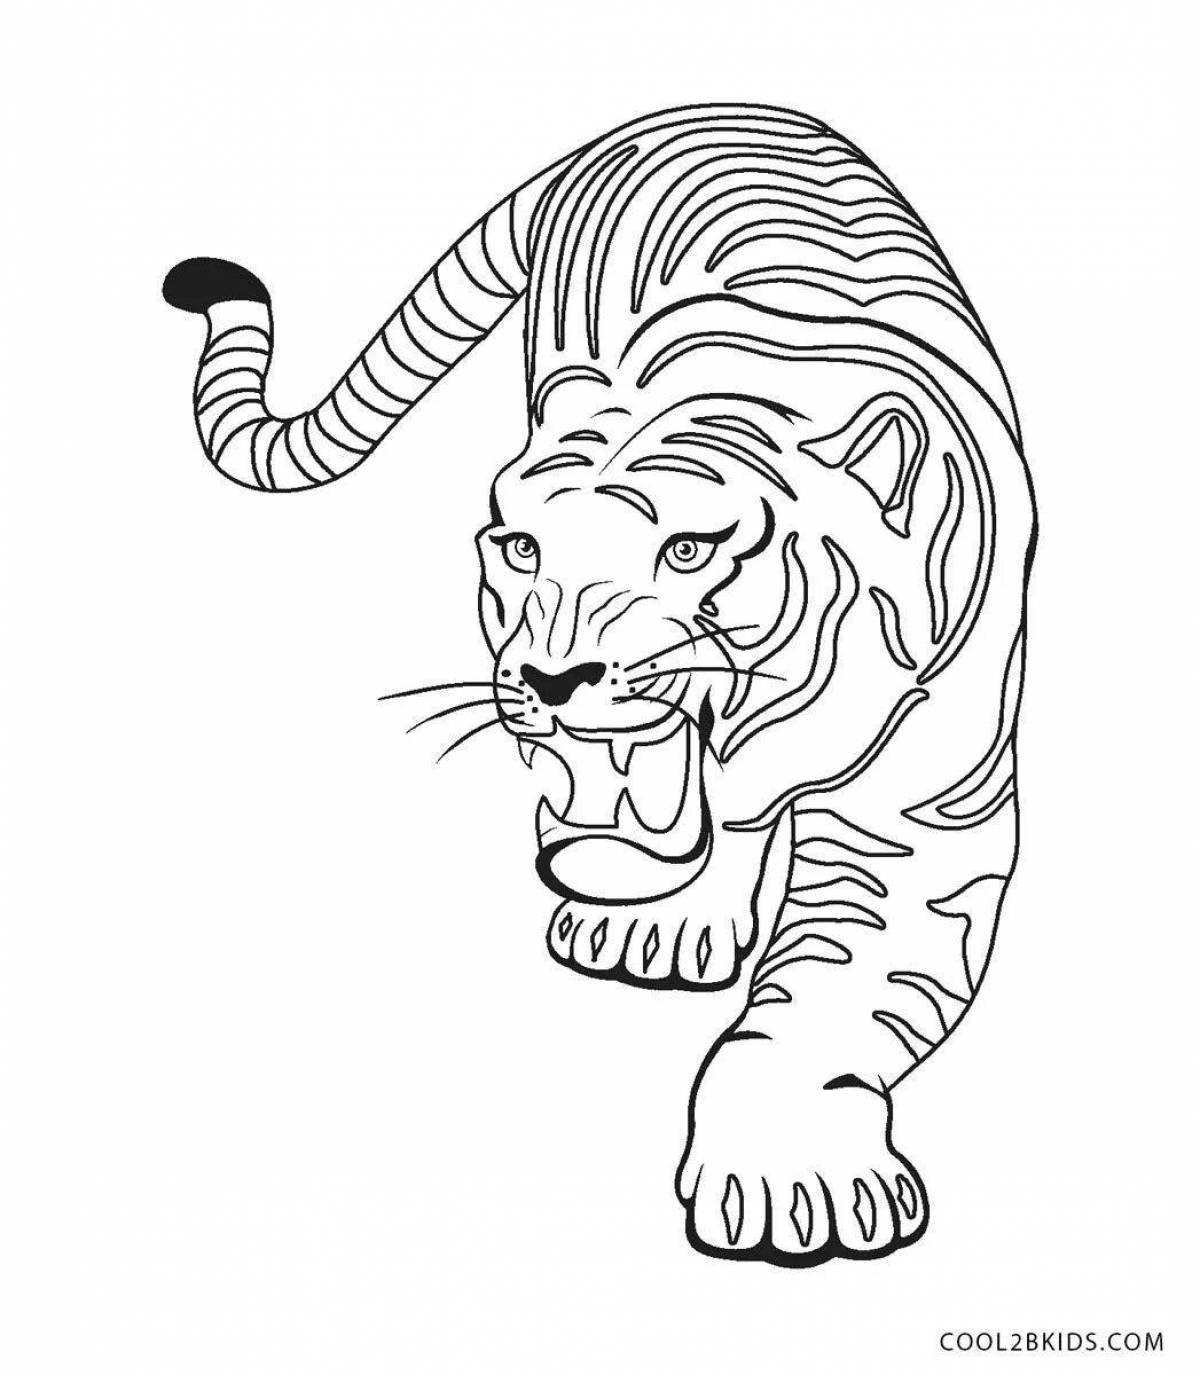 Brilliant tiger coloring